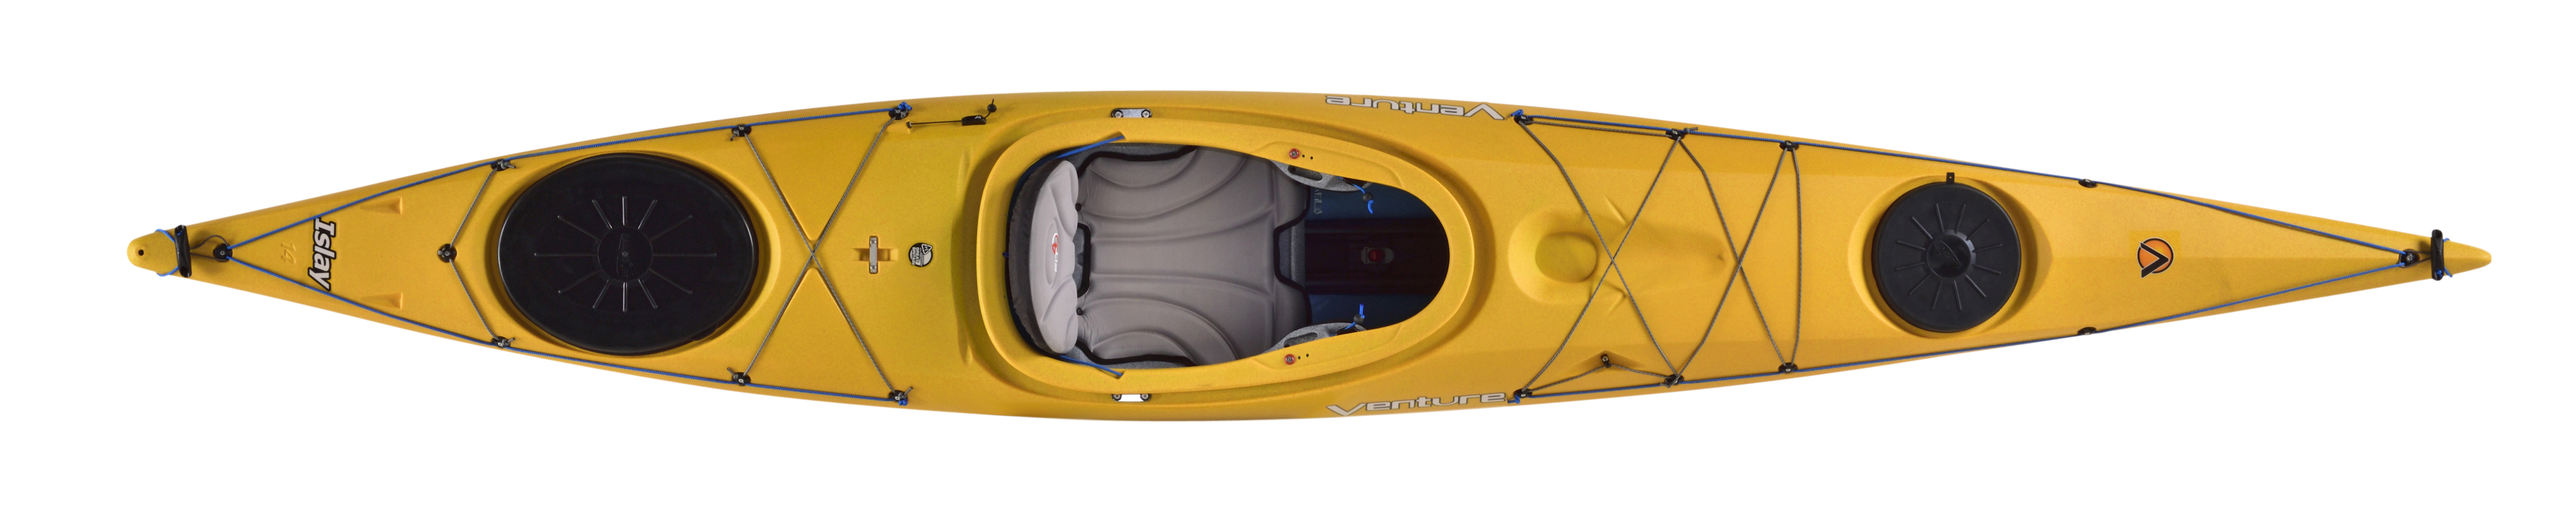 Kayaks: Islay 12 Sport by Venture - Image 2697